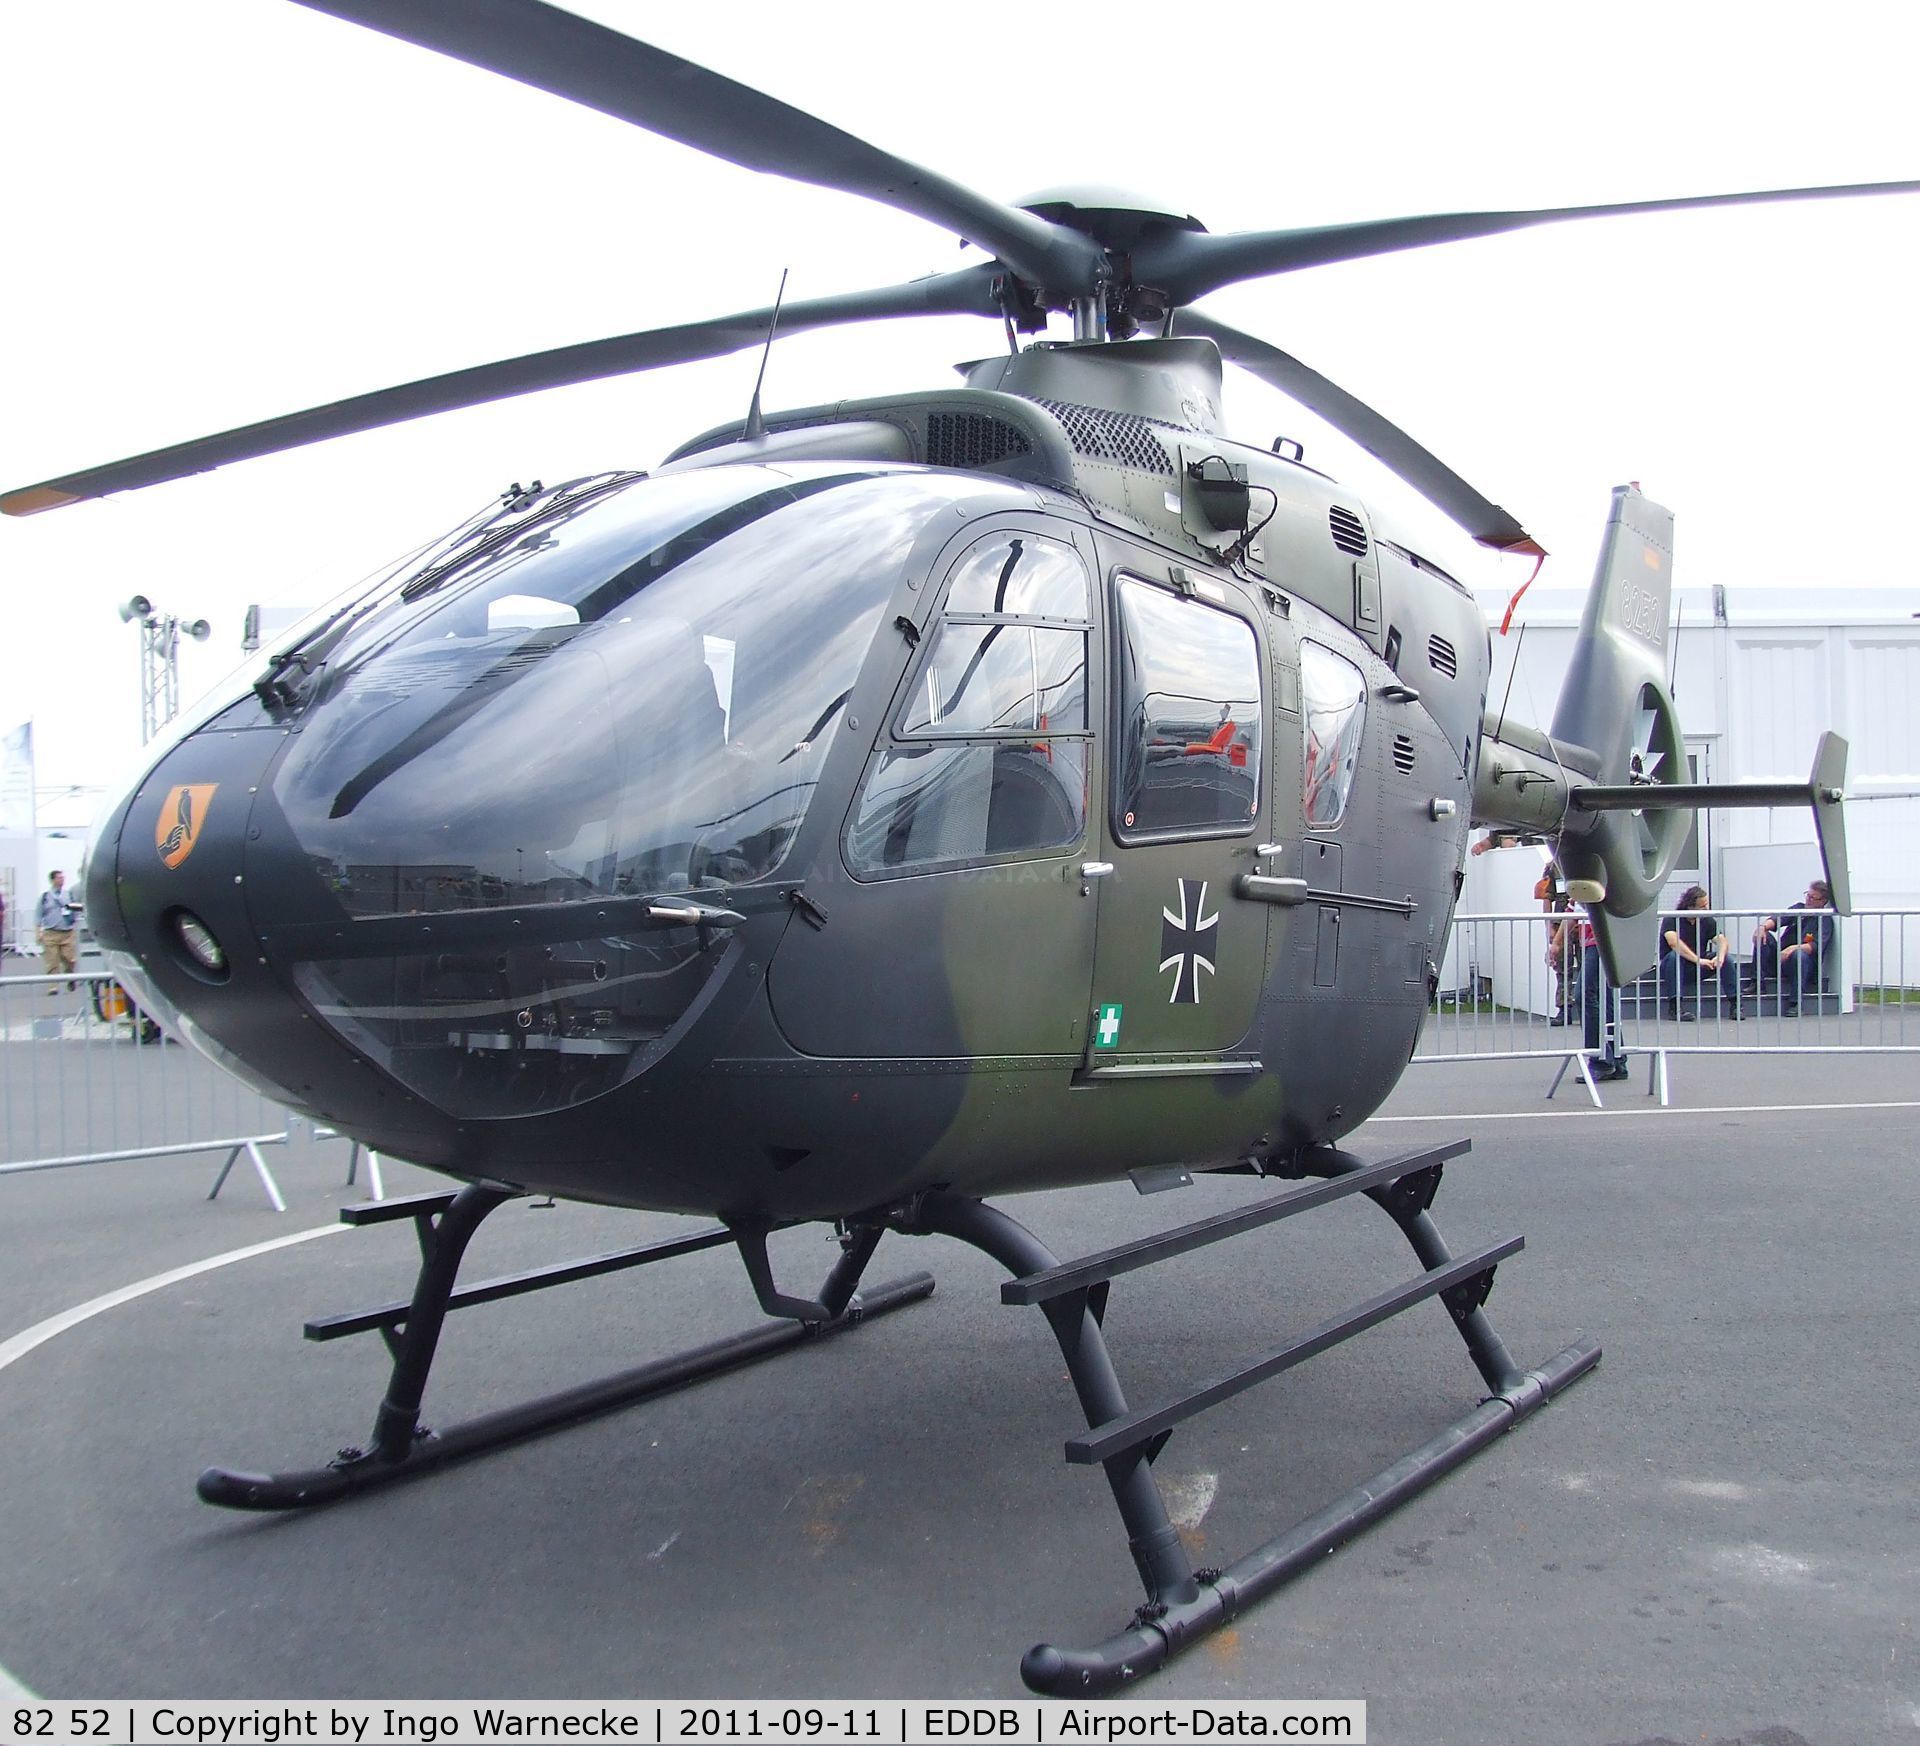 82 52, 2000 Eurocopter EC-135T-1 C/N 0093, Eurocopter EC135T-1 of the German army (Heeresflieger) at the ILA 2012, Berlin